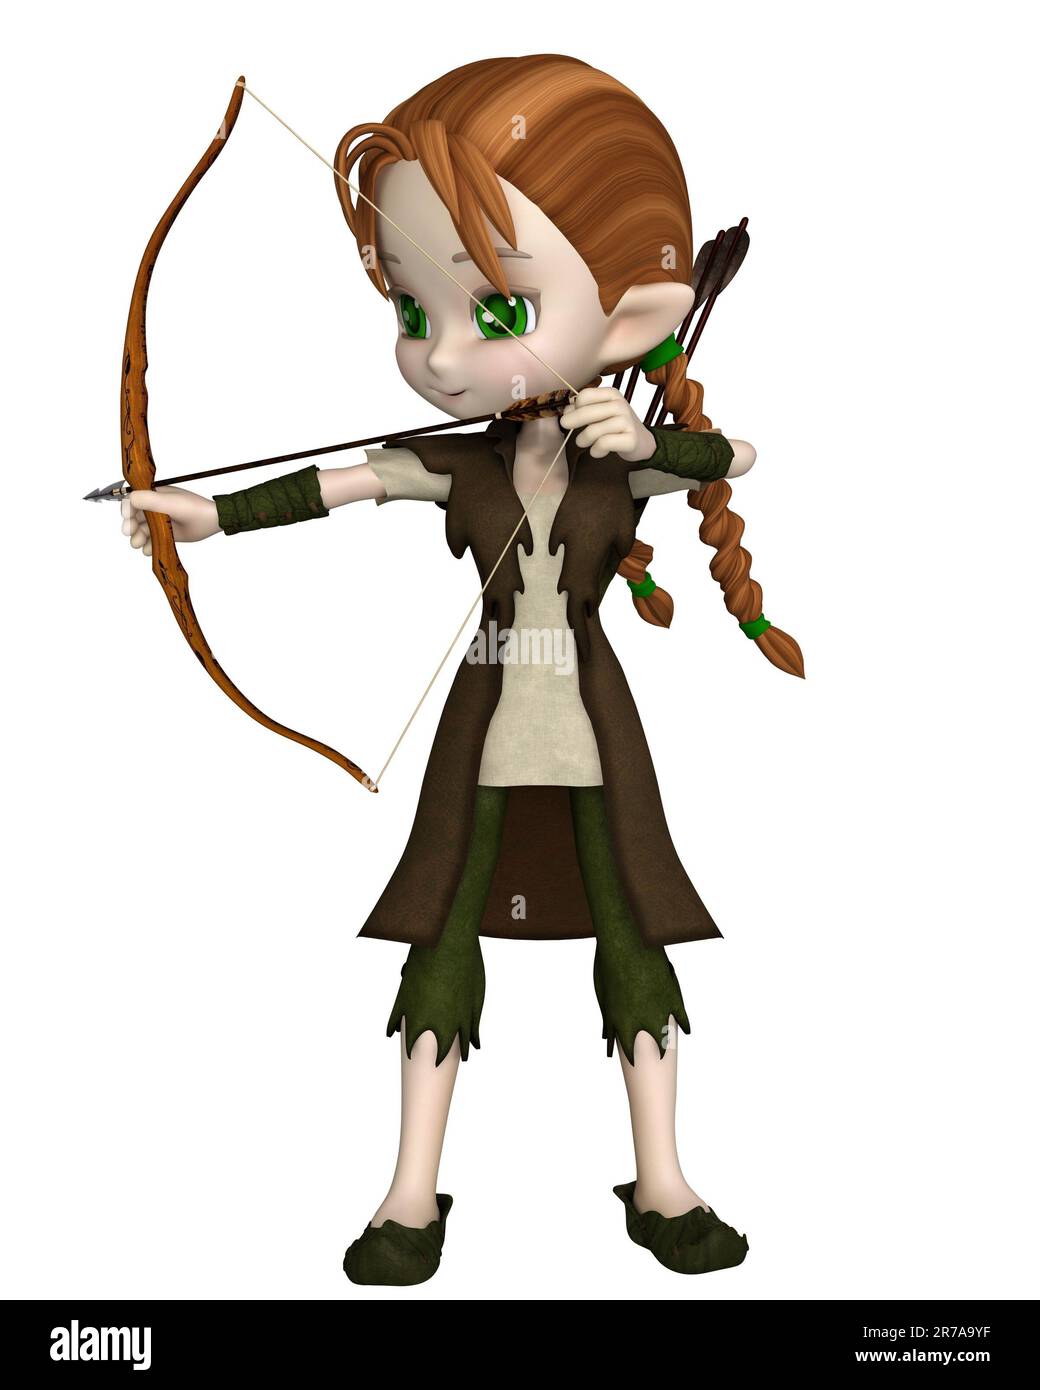 Cute Toon Wood Elf Archer Girl Taking Aim Stock Photo